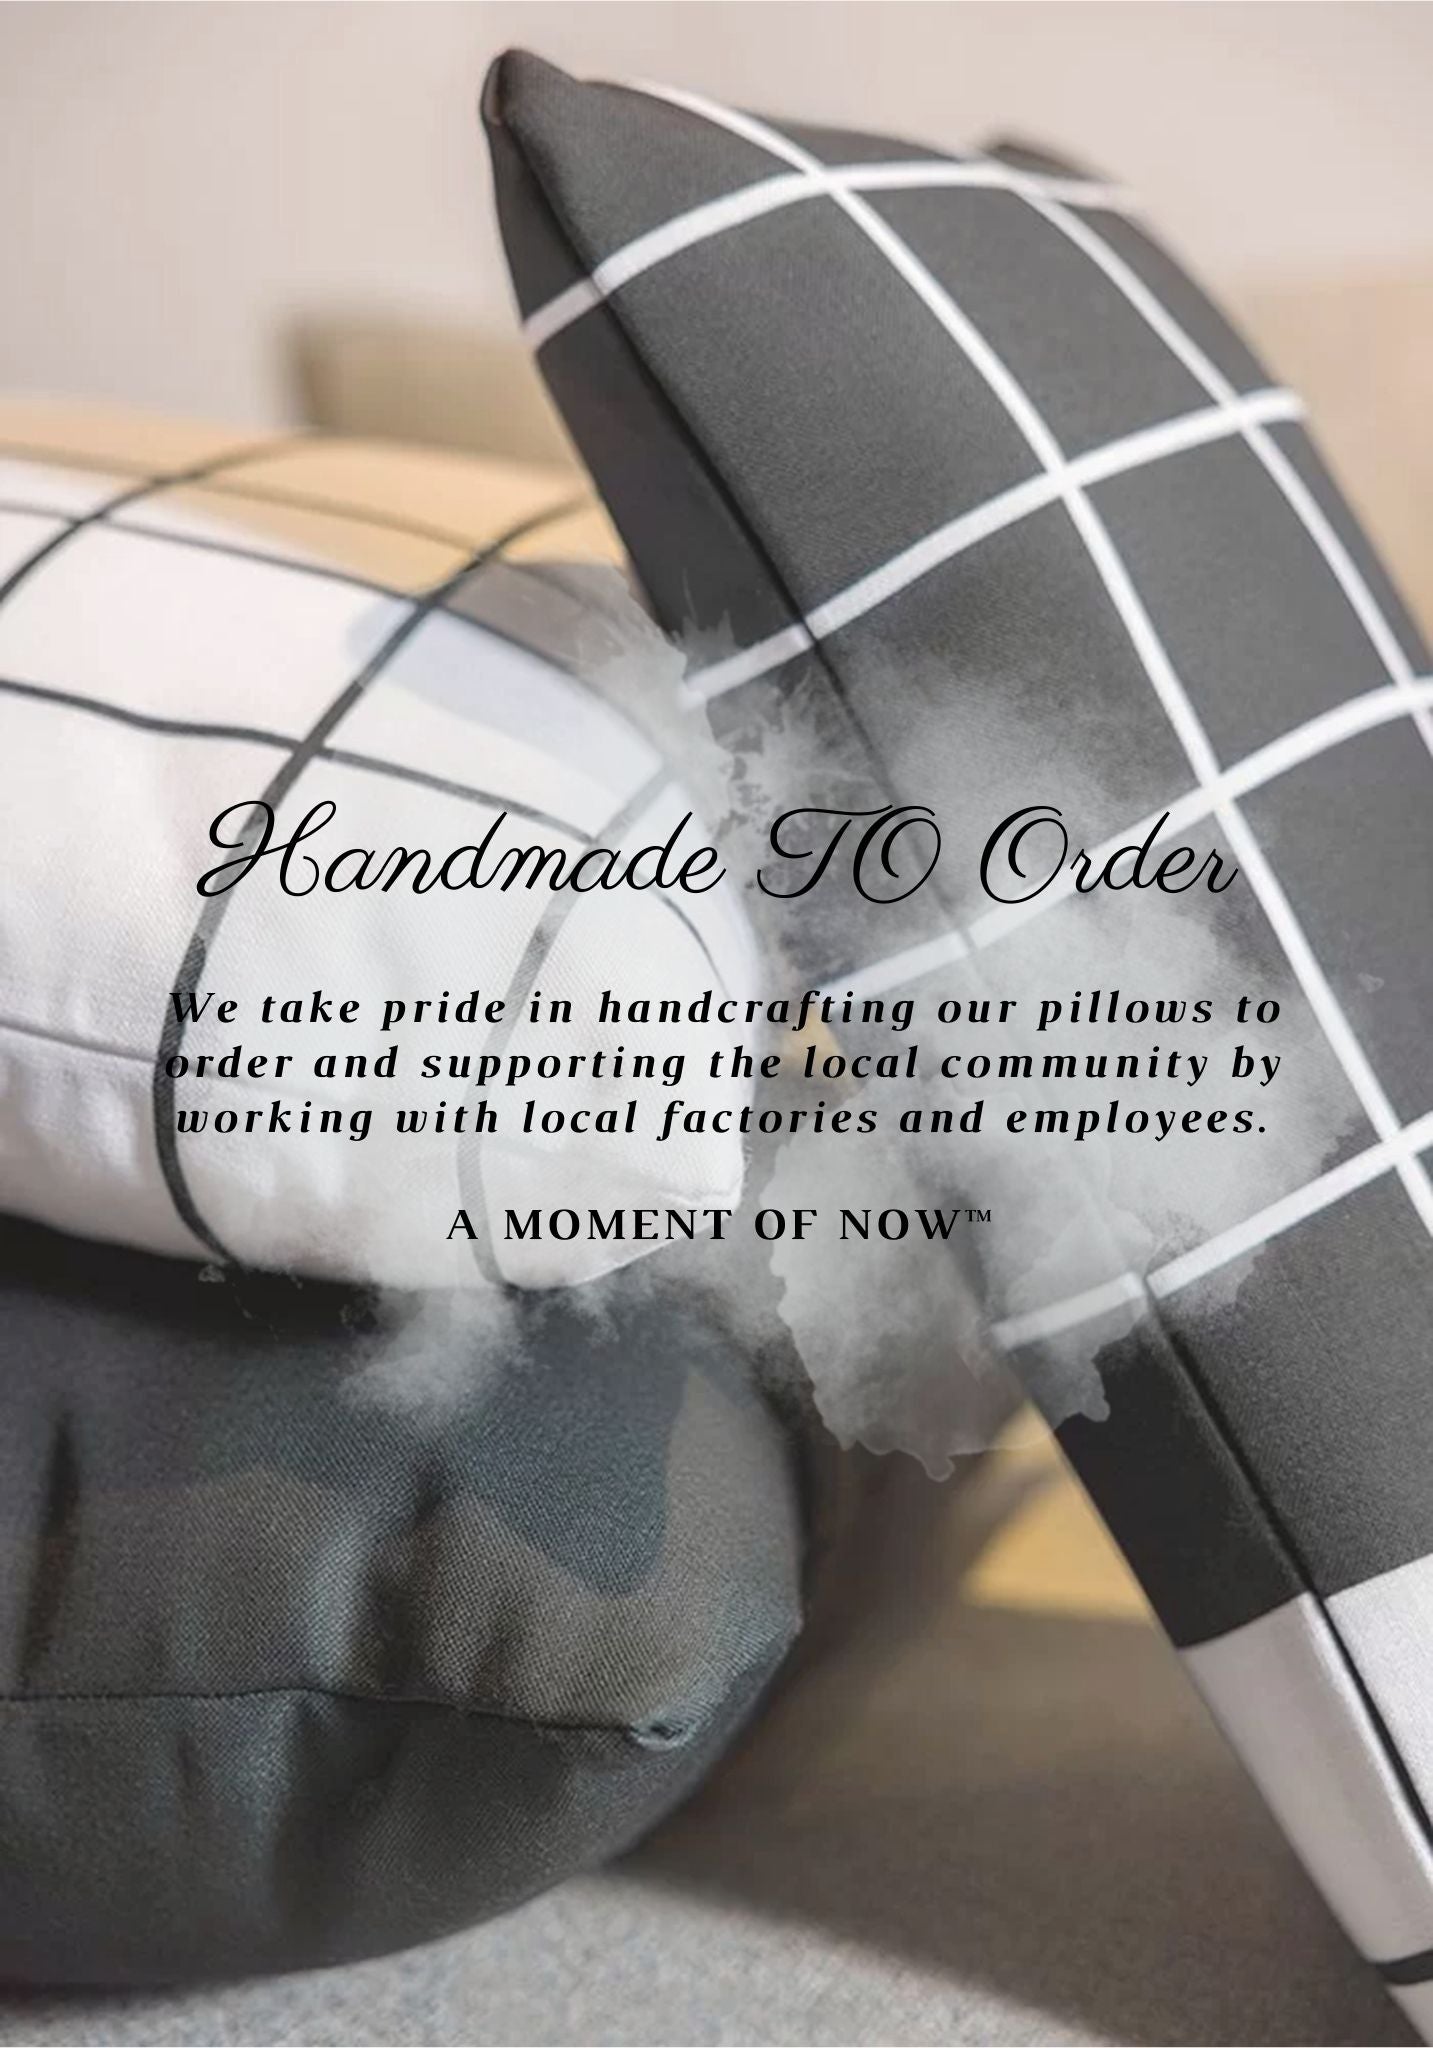 Shop Black And White Geometry Modern Premium Decorative Accent Throw Pillow Cushion, Throw Pillows, USA Boutique